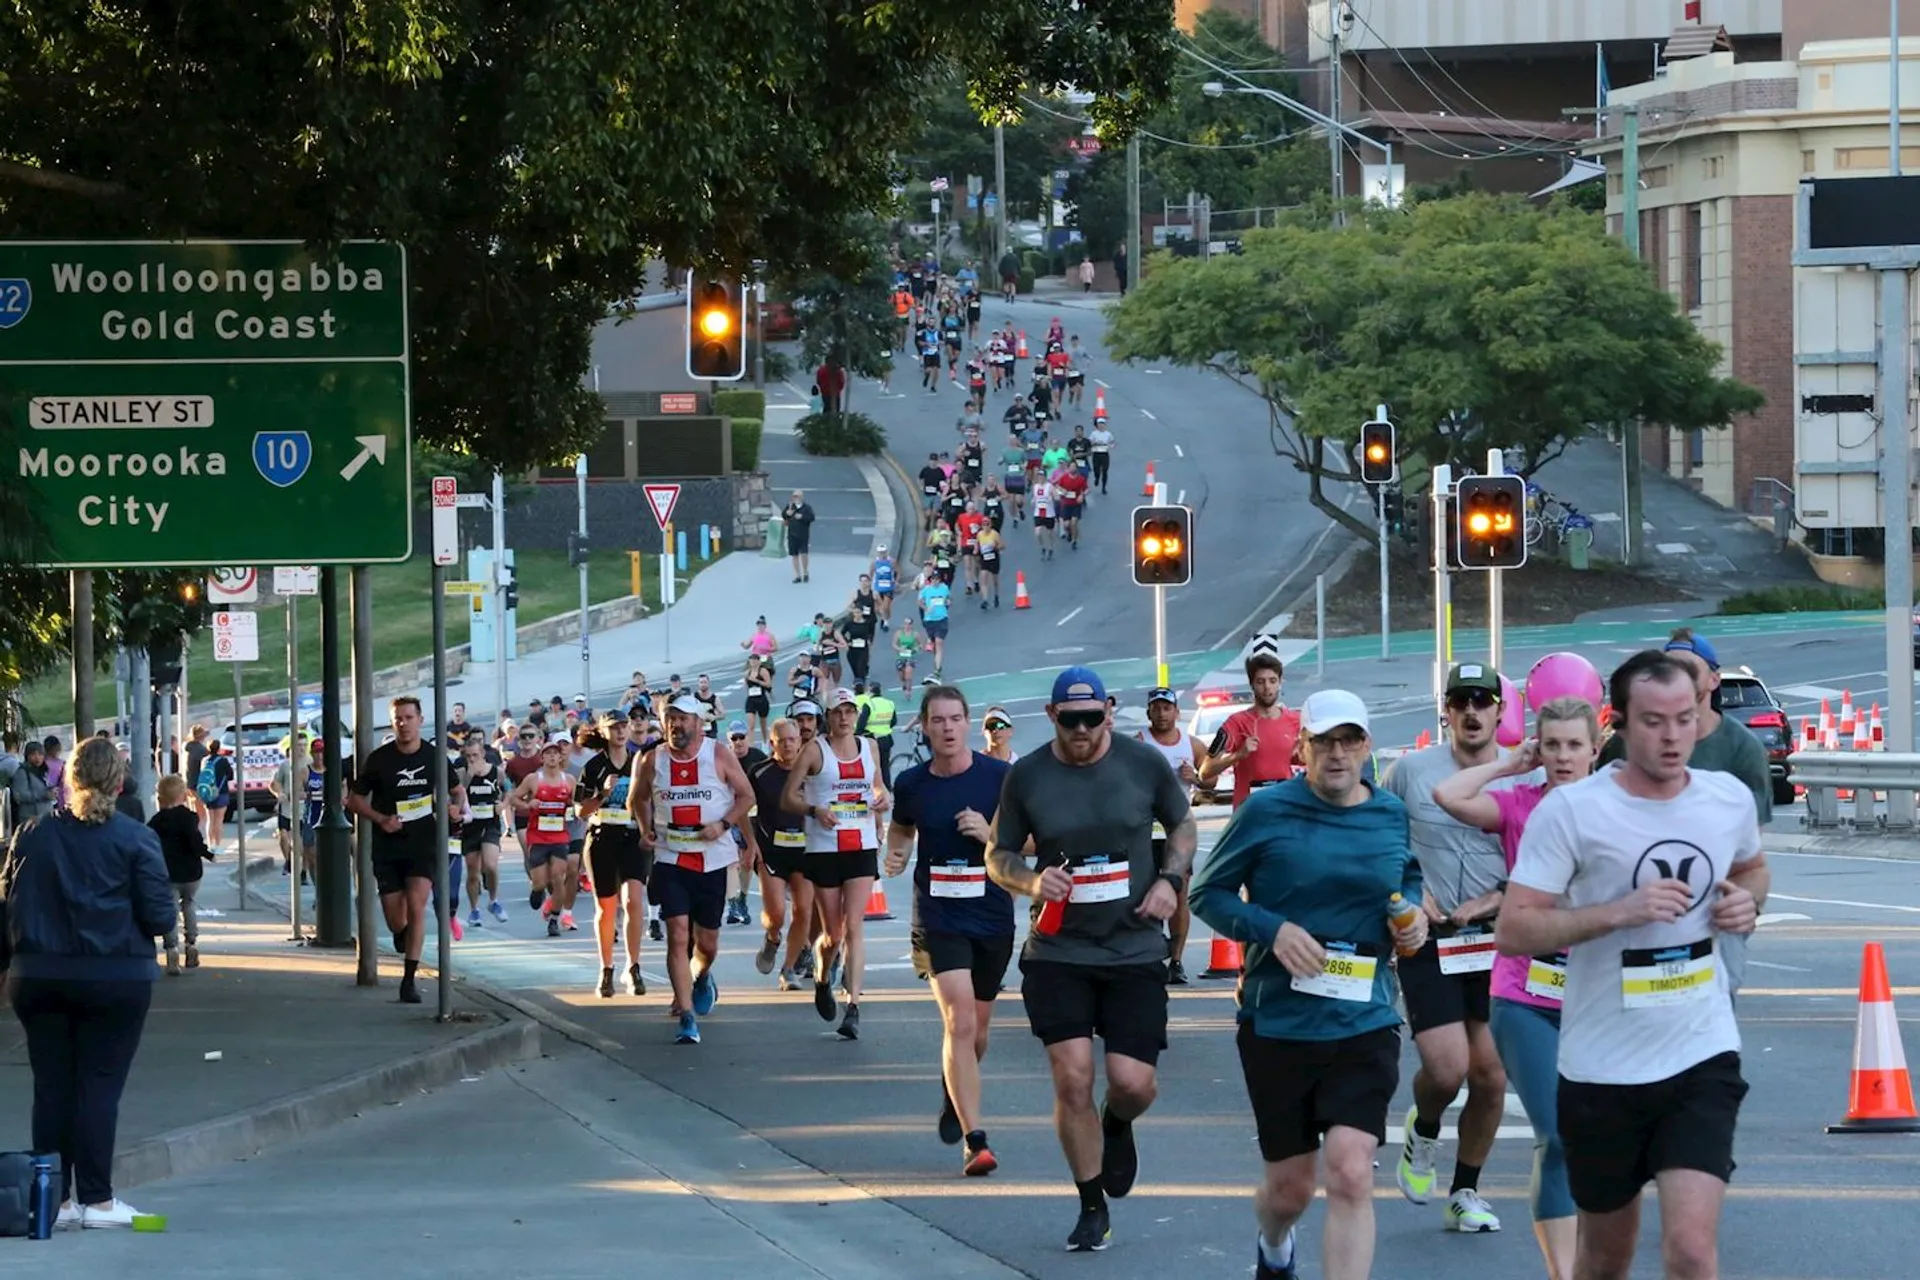 Brisbane Marathon Festival